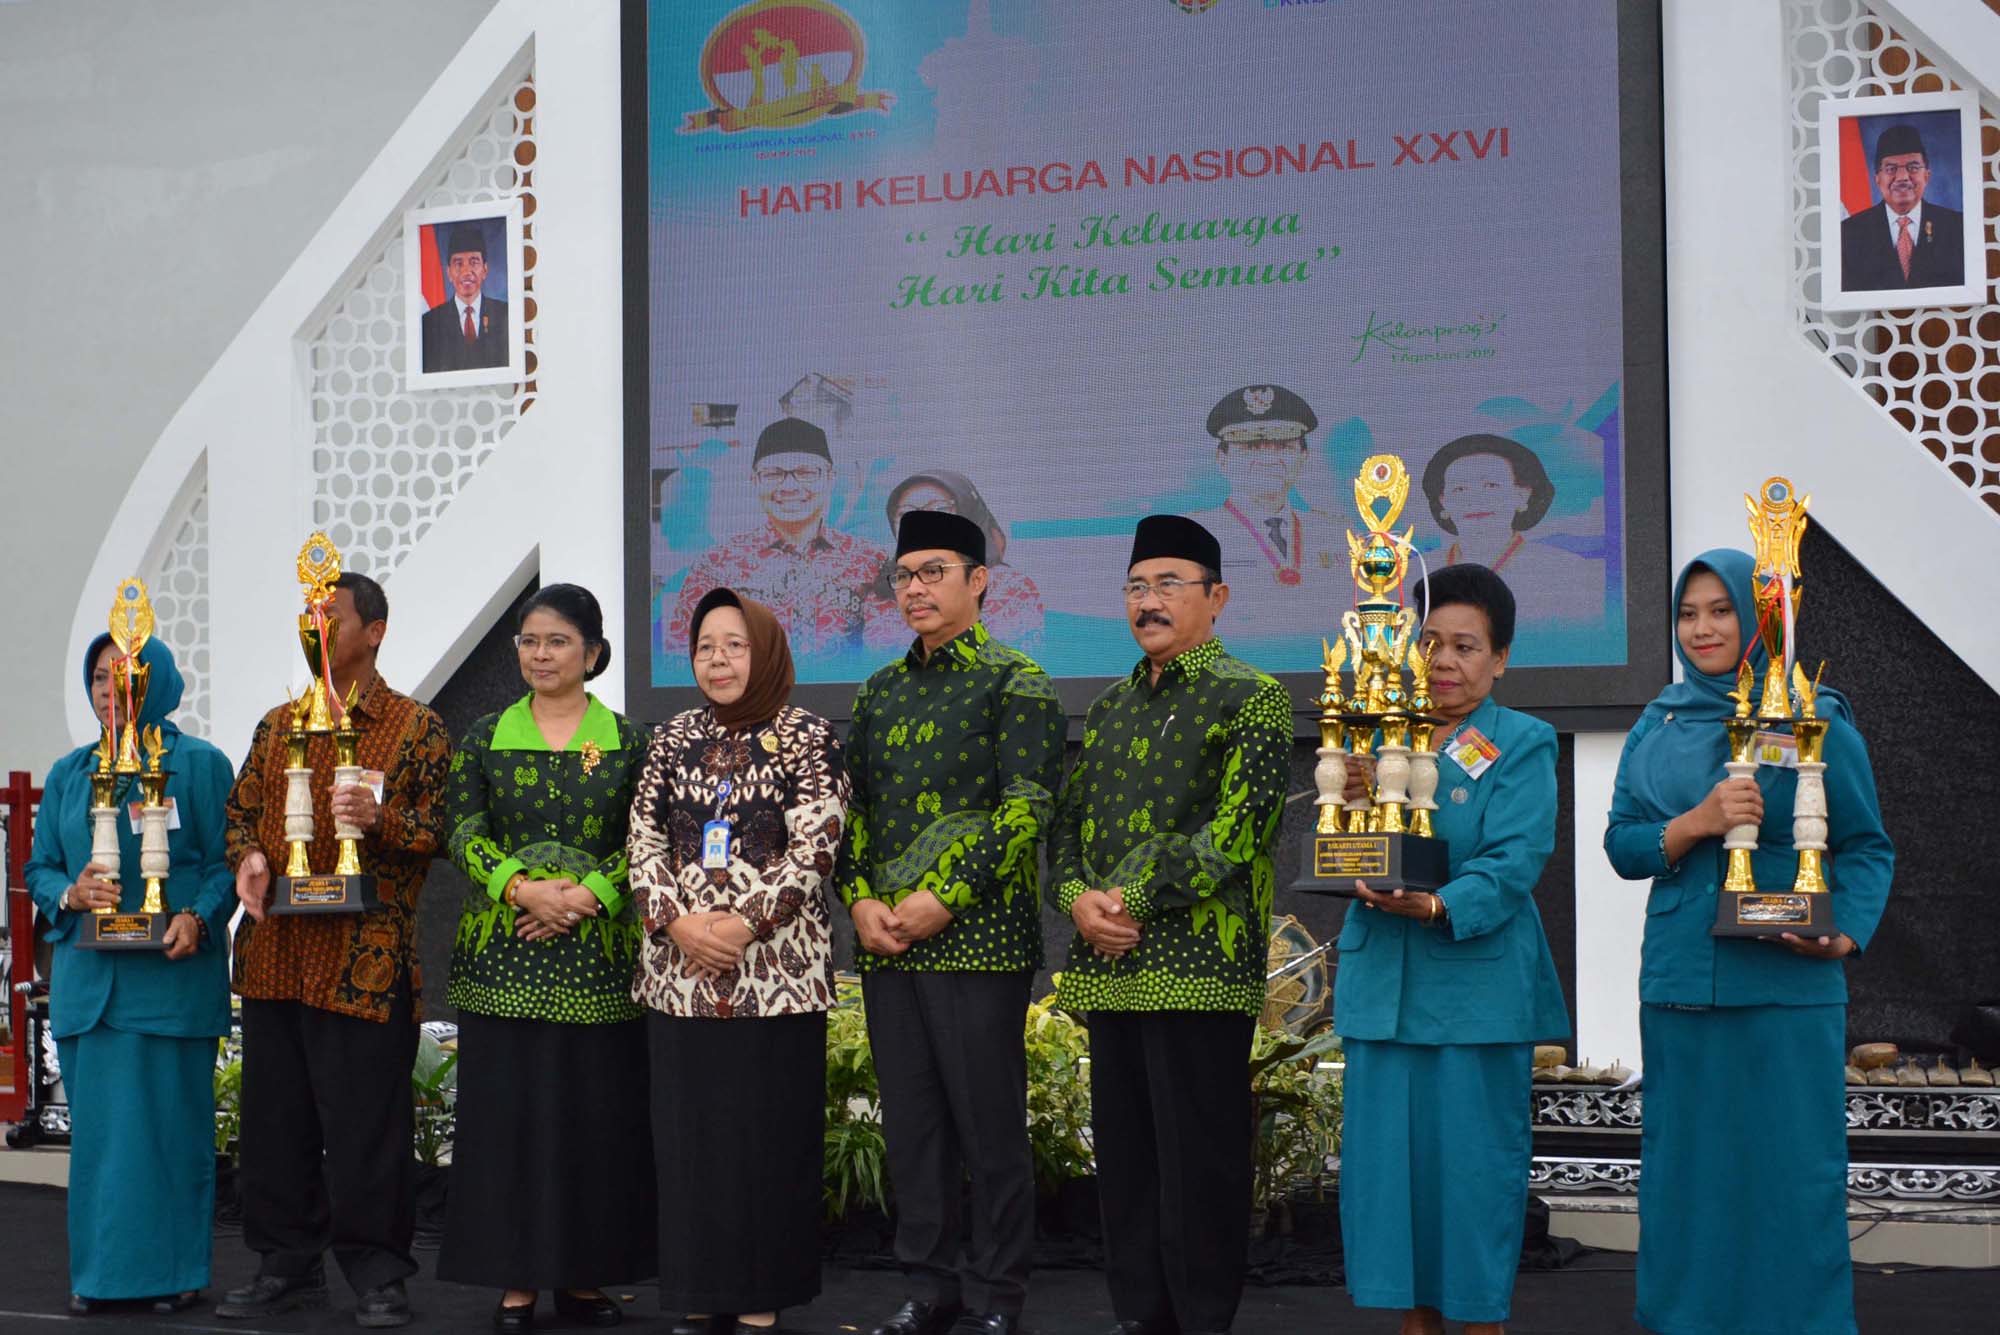 Hari Keluarga Nasional ke XXVI tingkat Daerah Istimewa Yogyakarta